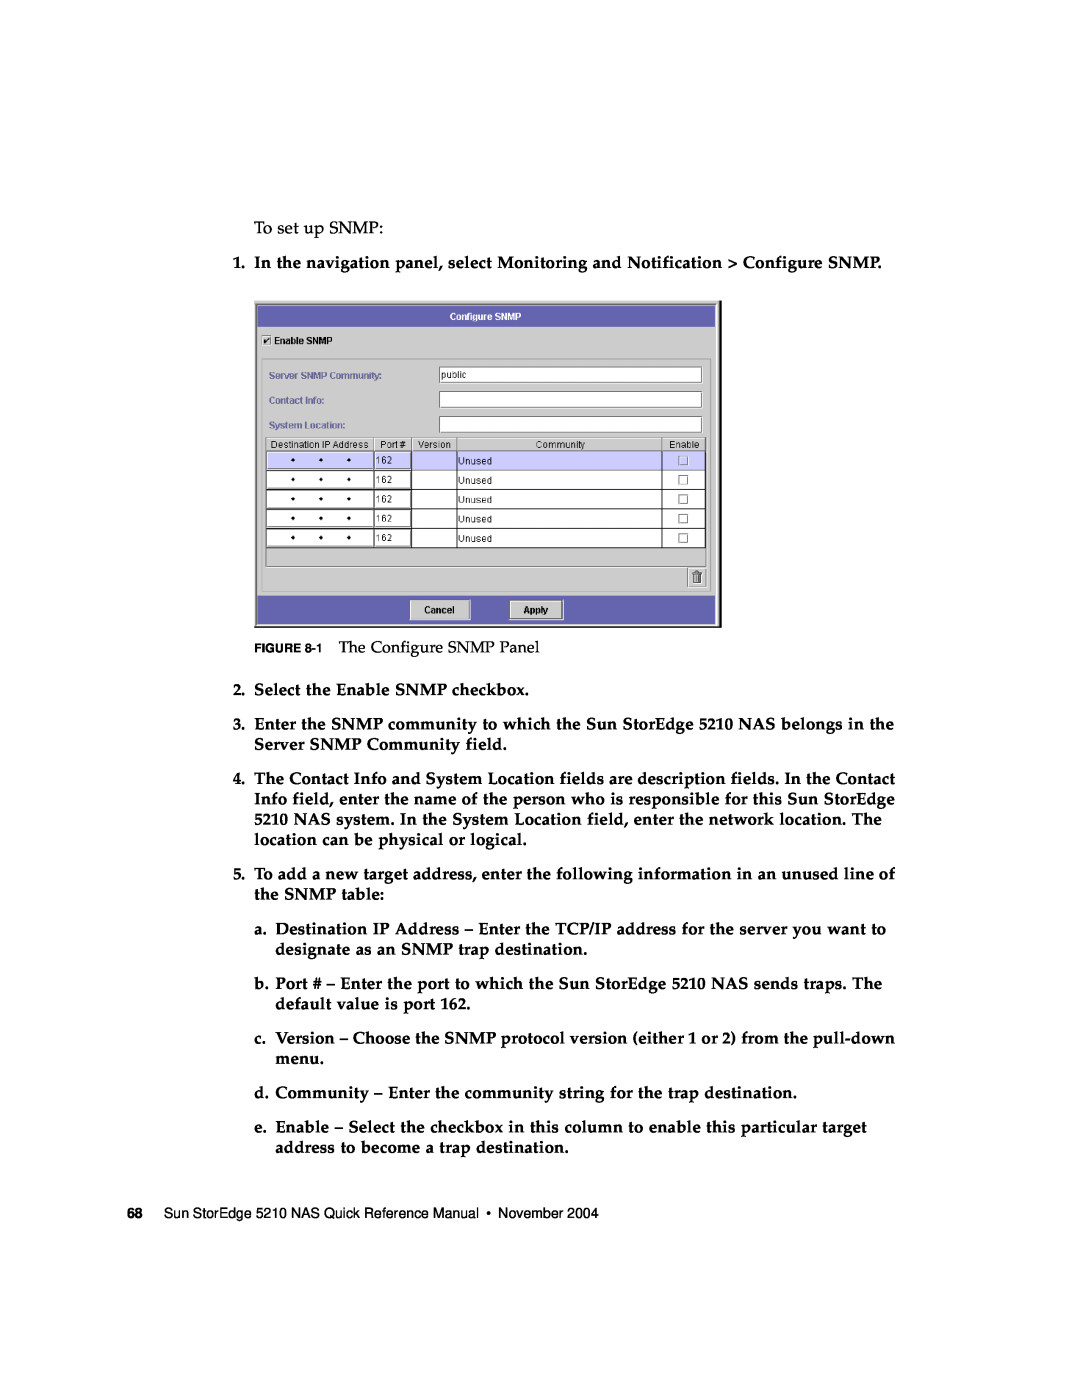 Sun Microsystems 5210 NAS manual Select the Enable SNMP checkbox 